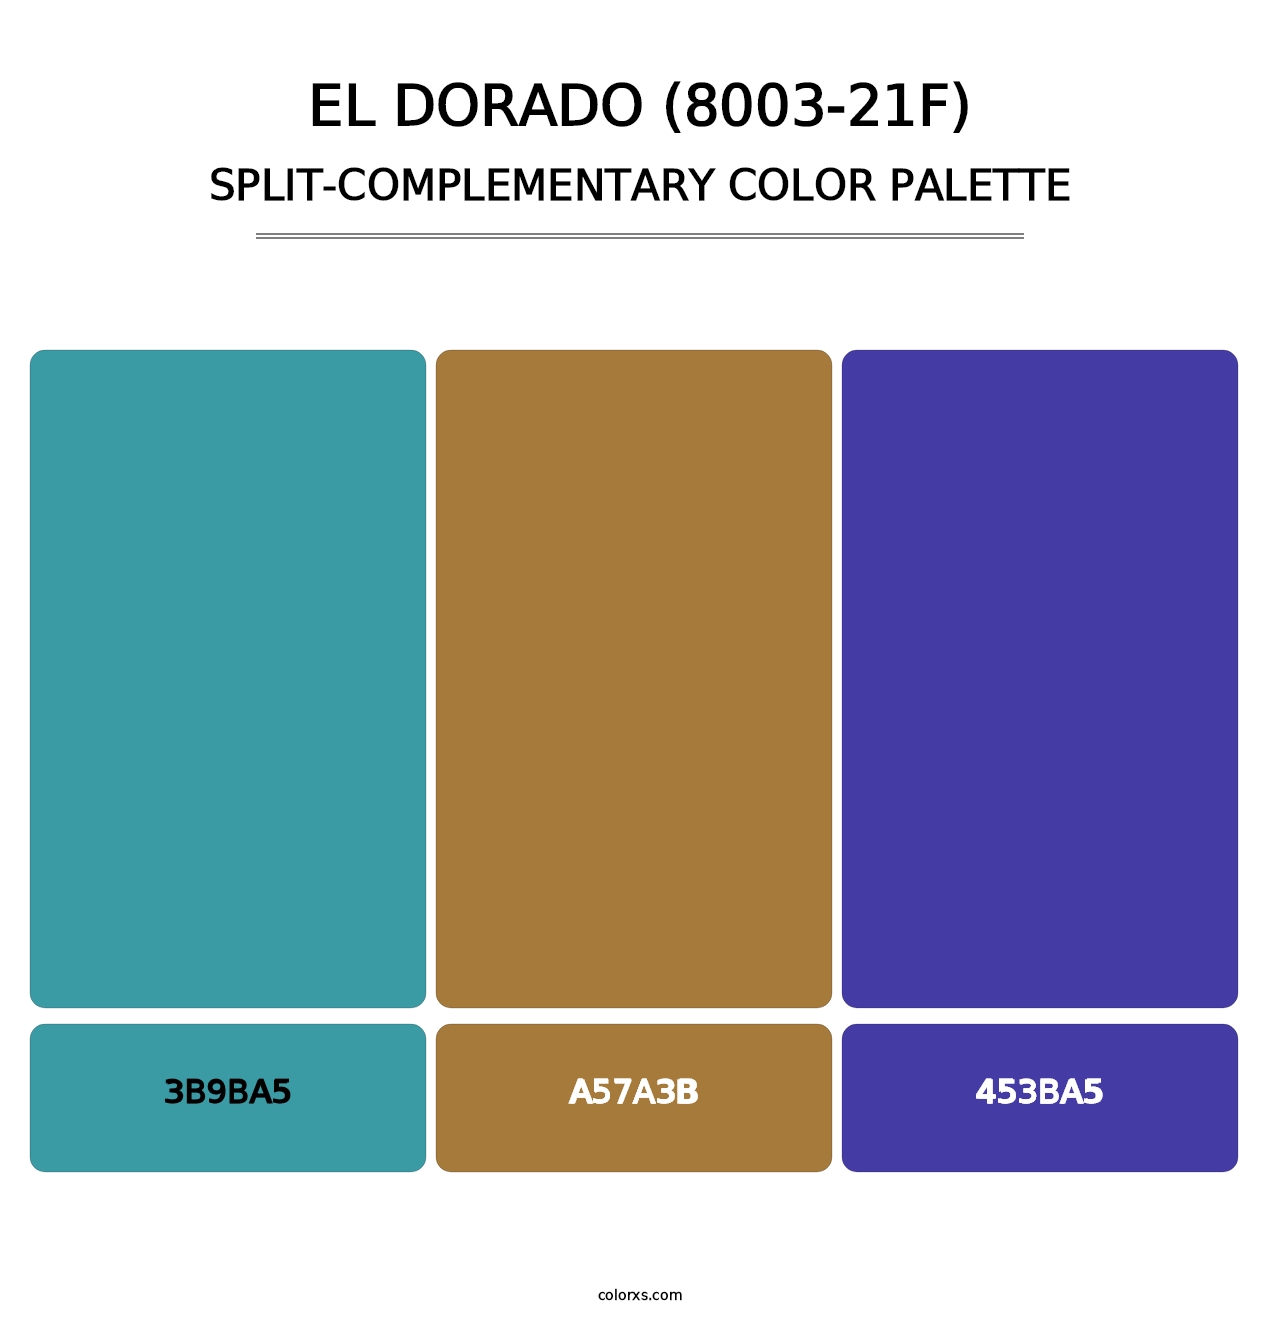 El Dorado (8003-21F) - Split-Complementary Color Palette